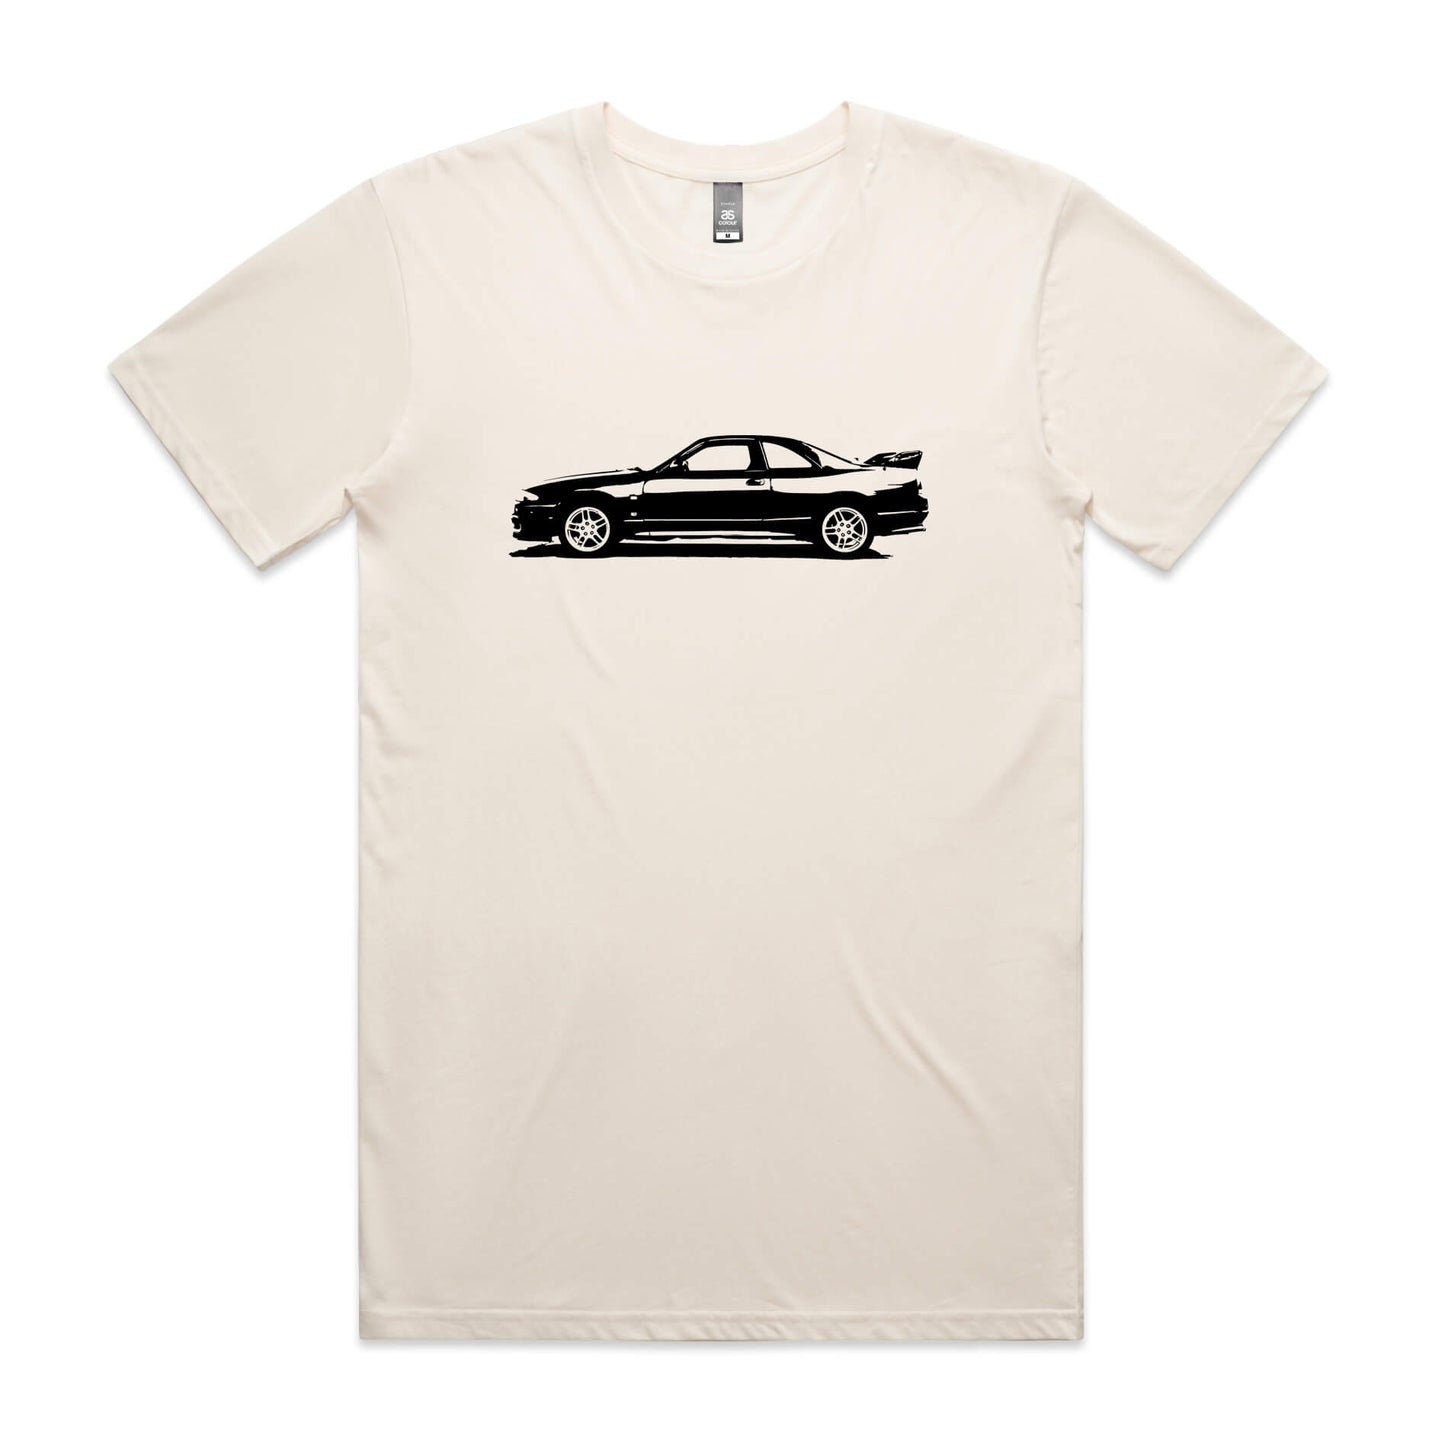 Nissan R33 GT-R Skyline T-Shirt